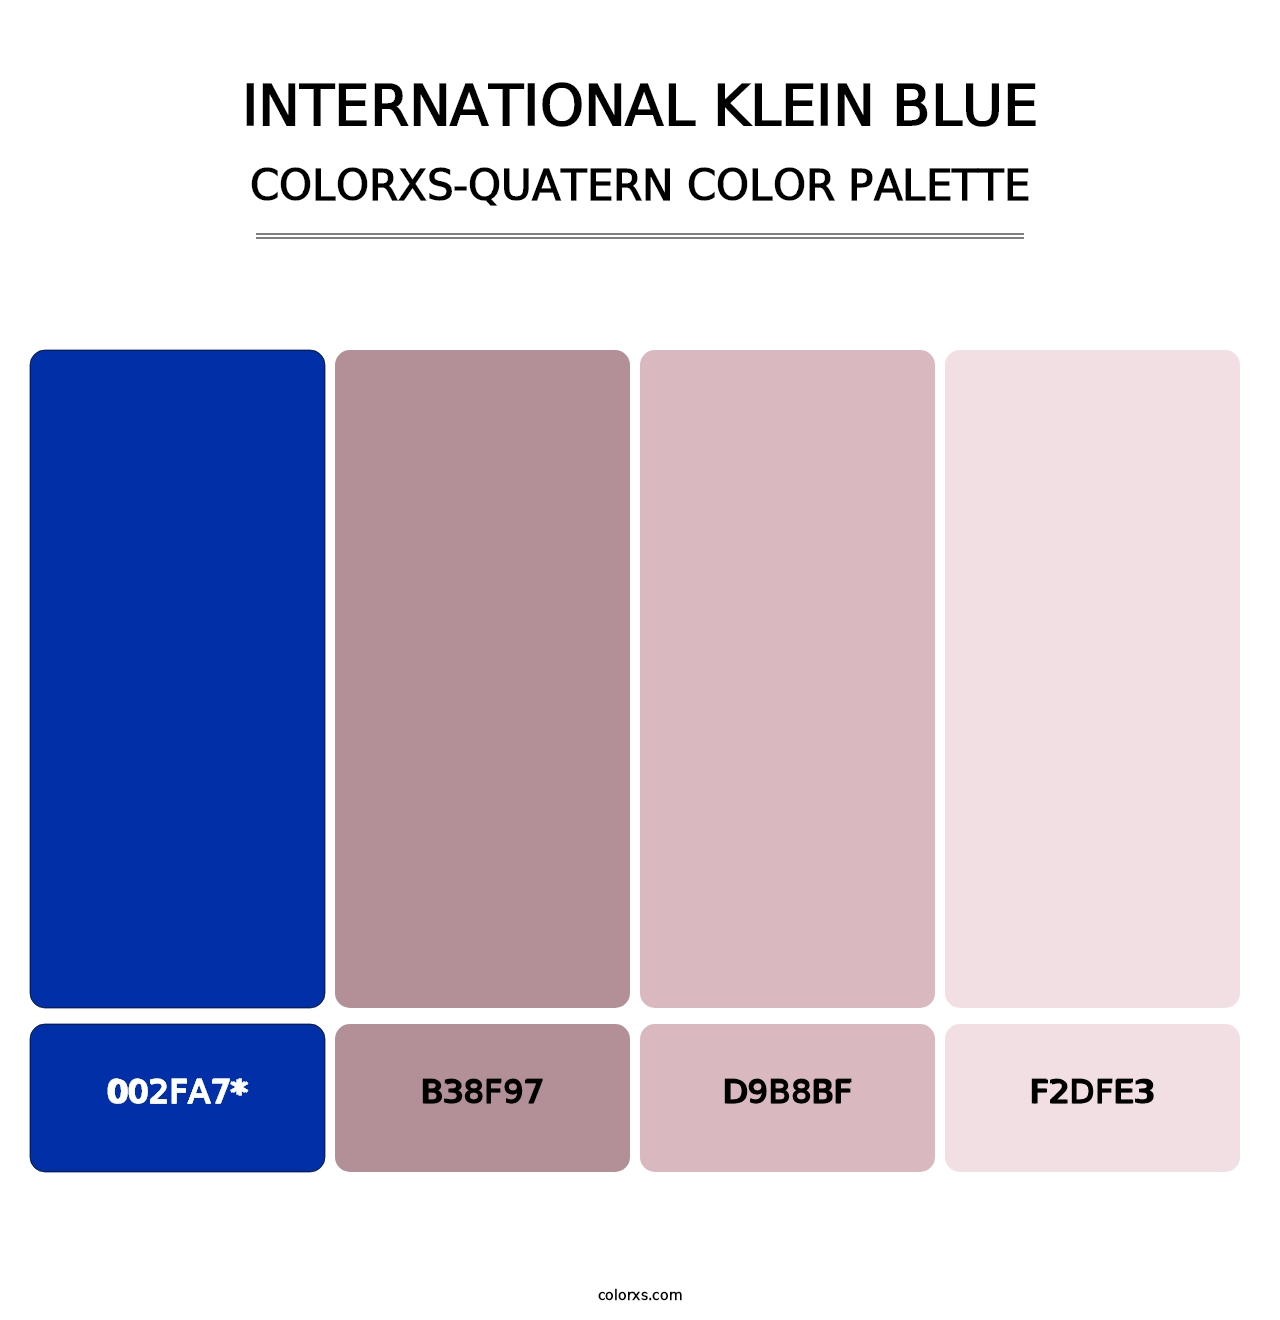 International Klein Blue - Colorxs Quatern Palette